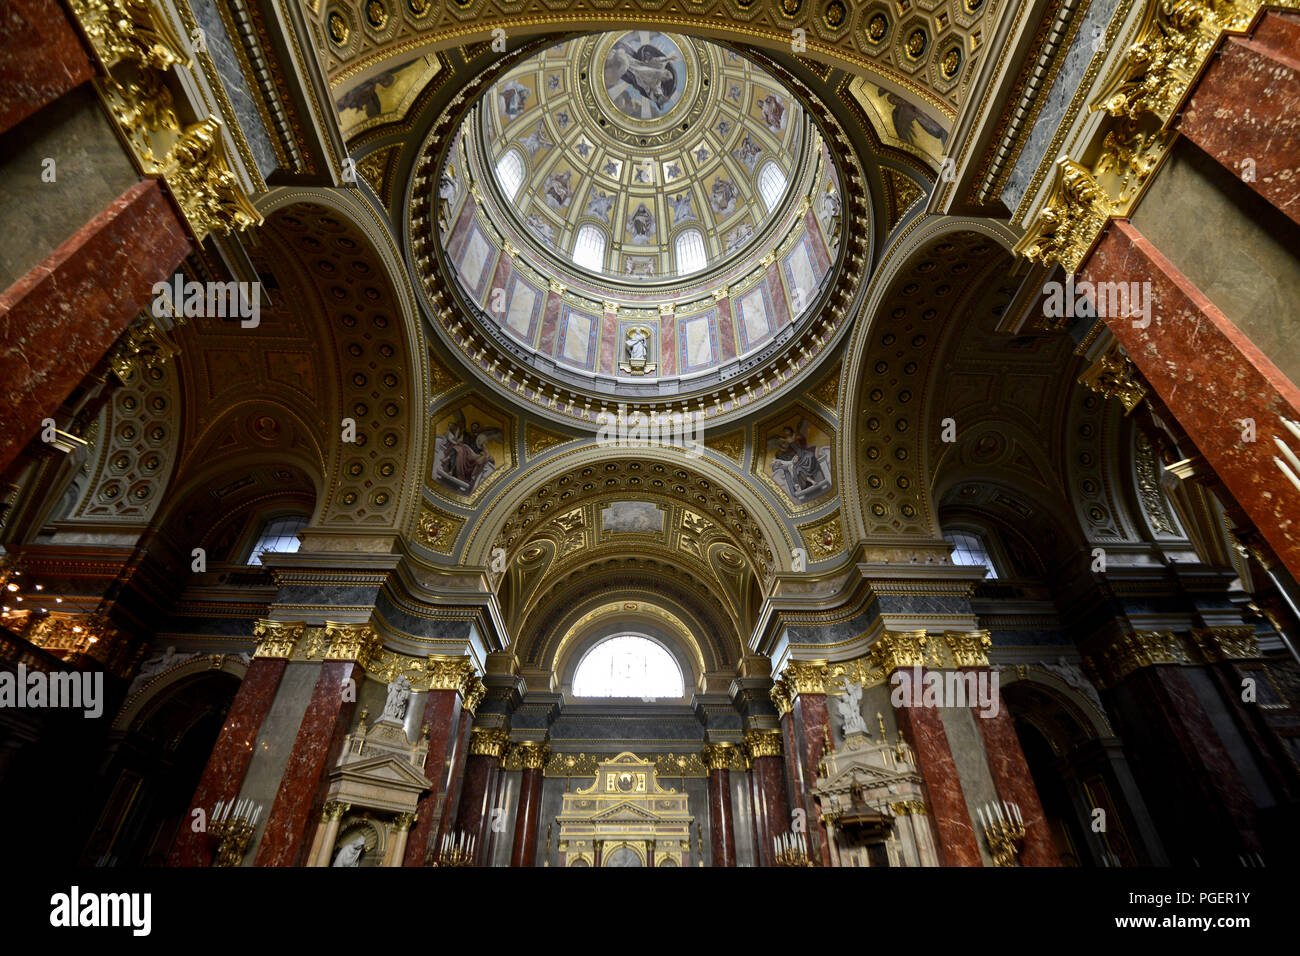 St Stephen Basilica, interior of the cupola - Budapest, Hungary Stock Photo